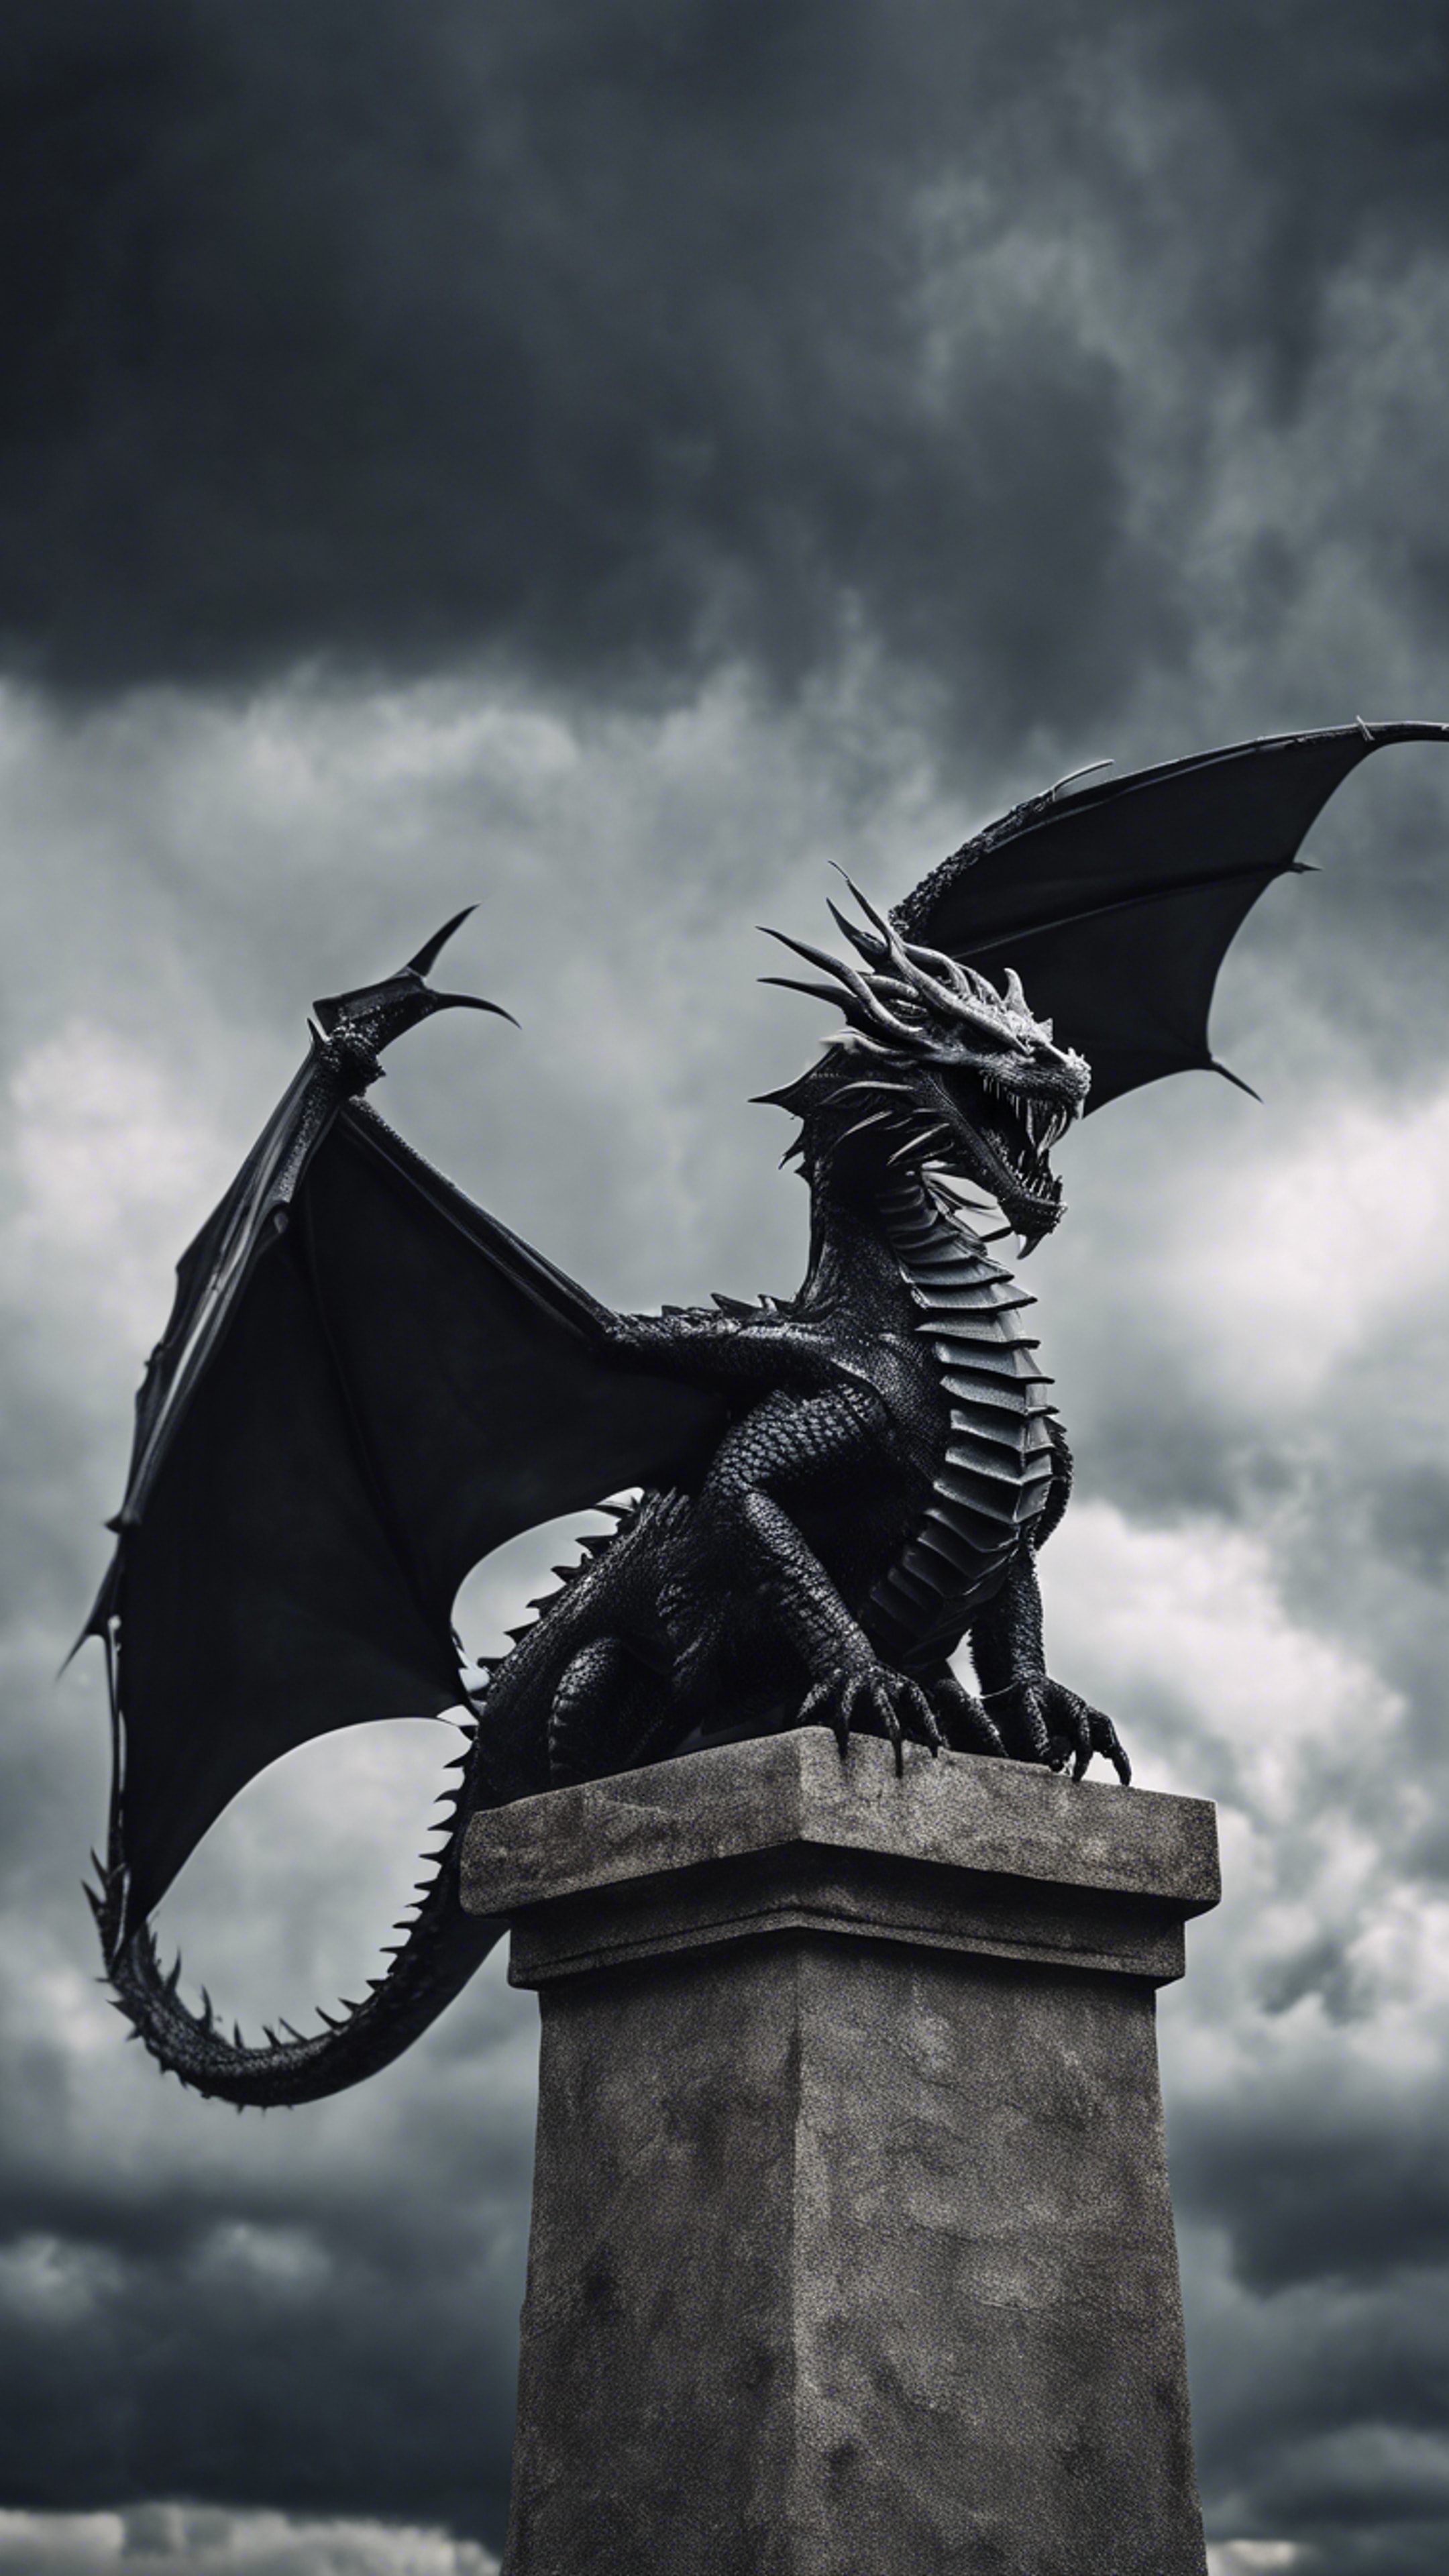 A gothic-style, black iron dragon flying amidst stormy, dark clouds. Tapeta na zeď[aebeaee8cf654a26baba]